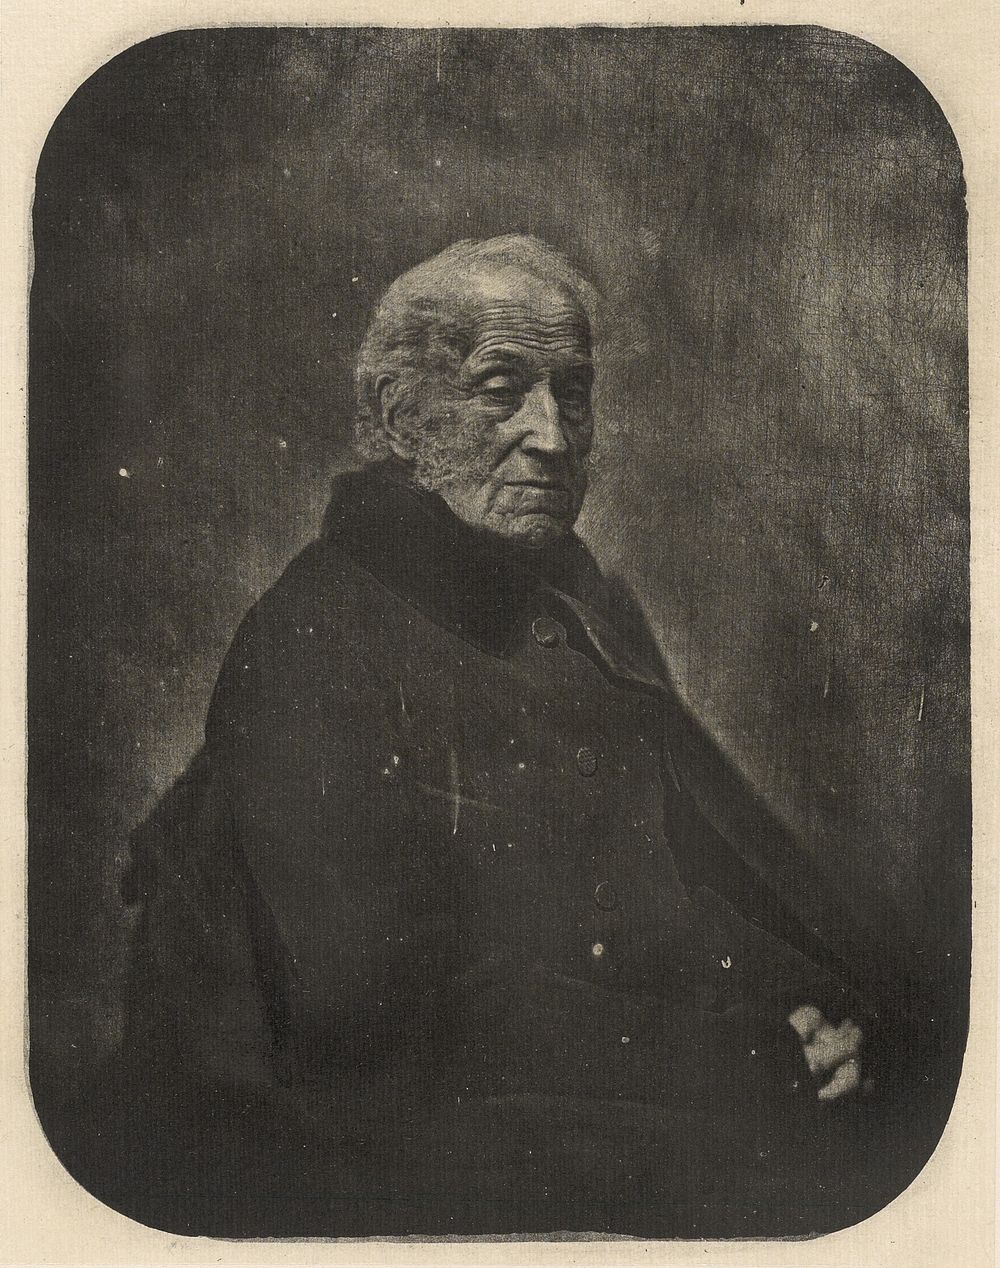 Portrait of Prince Adam Georges Czartorisky after Nadar by Charles Nègre